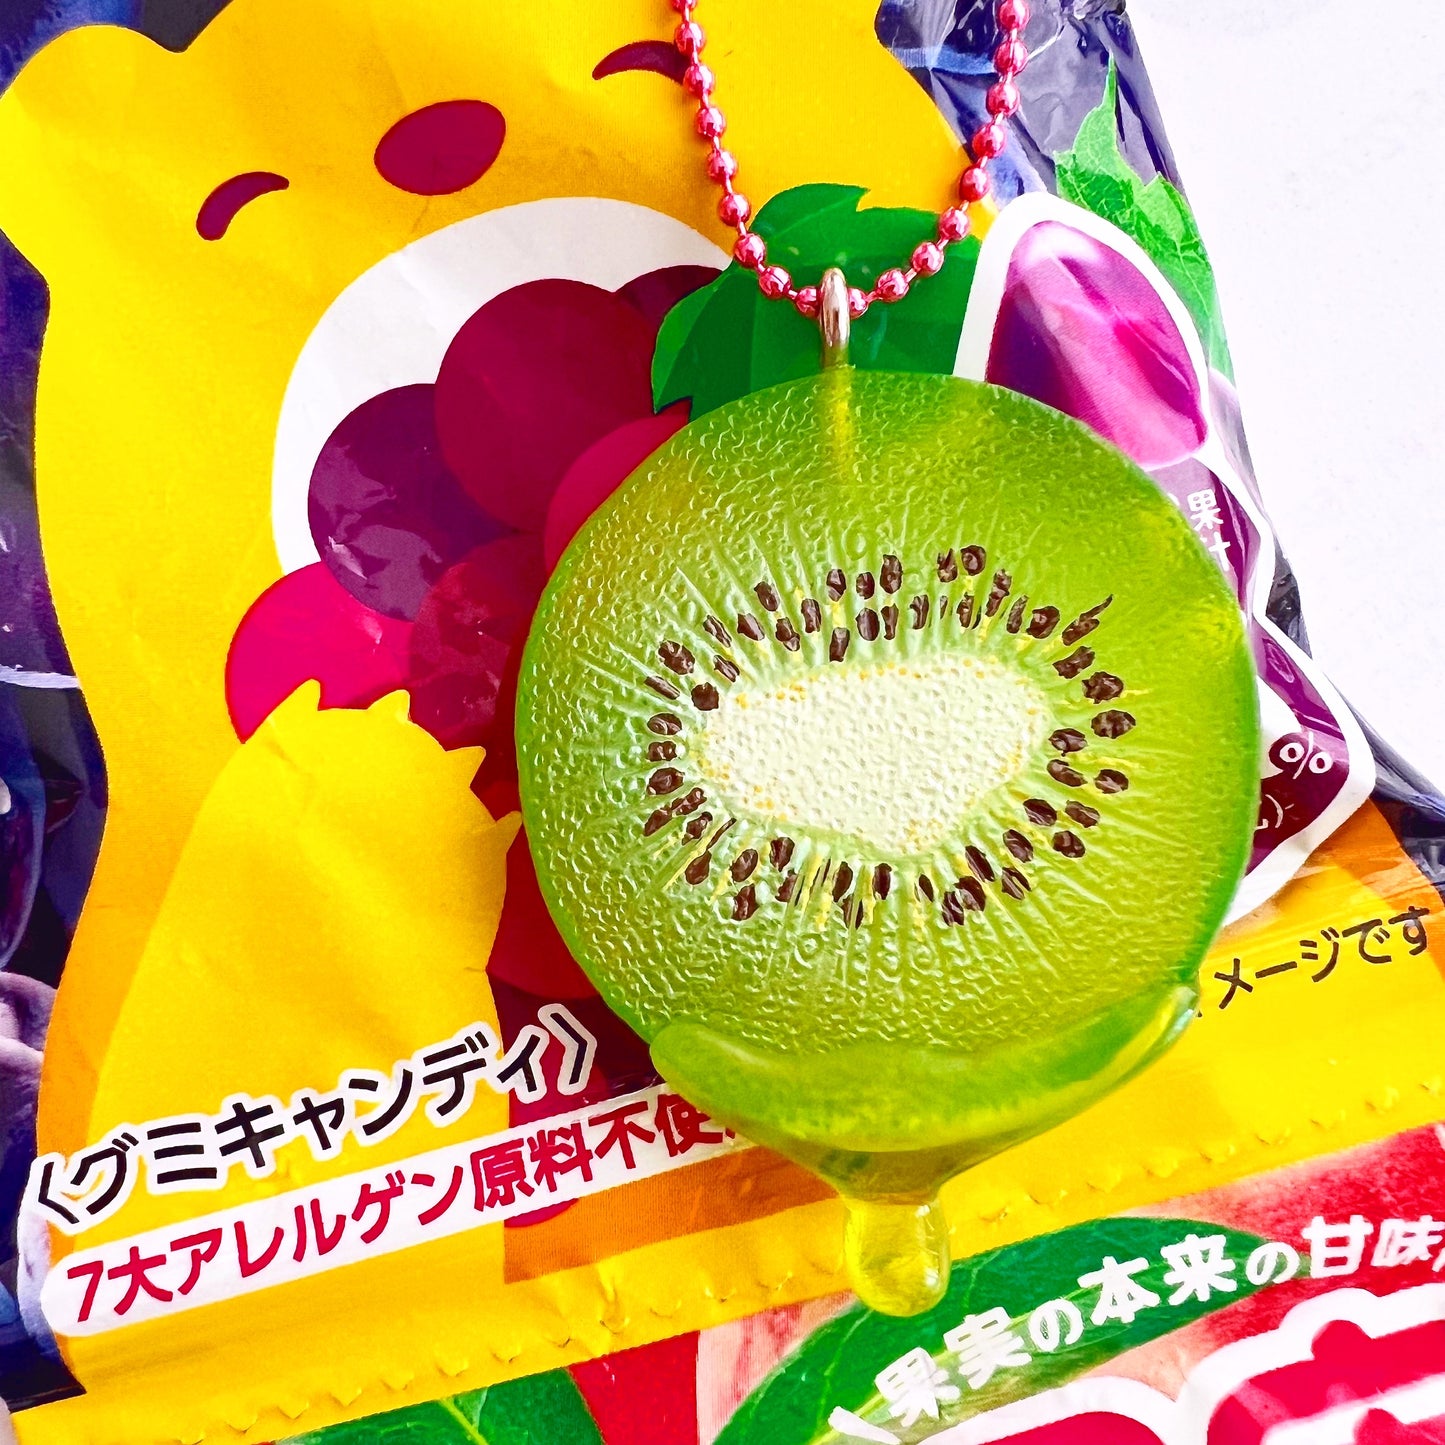 Sale! DeLuxe Juicy Fruit Necklace - Kiwi